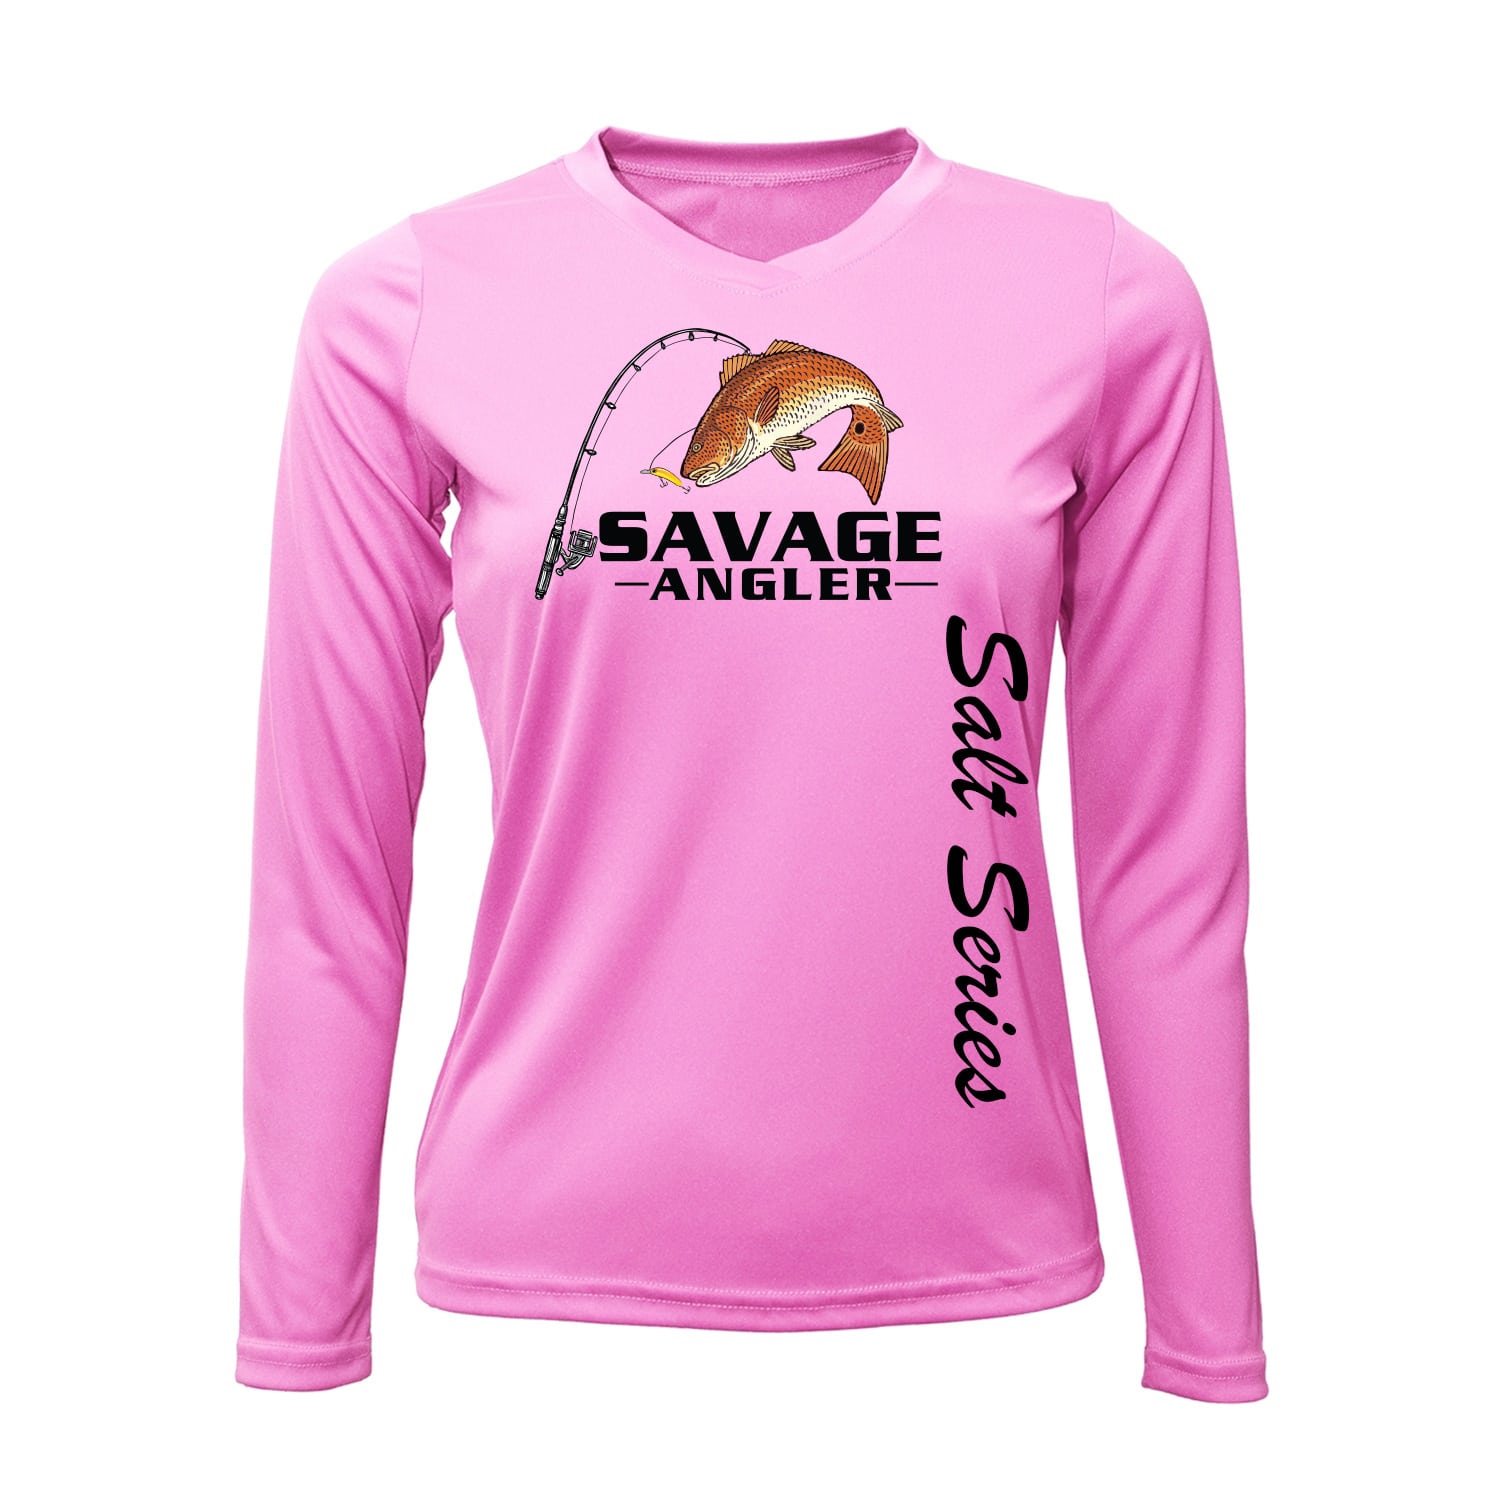 https://savageangler.com/wp-content/uploads/2021/03/Savage-Angler-Womens-Performance-Shirt_Pink_Front-1.jpg